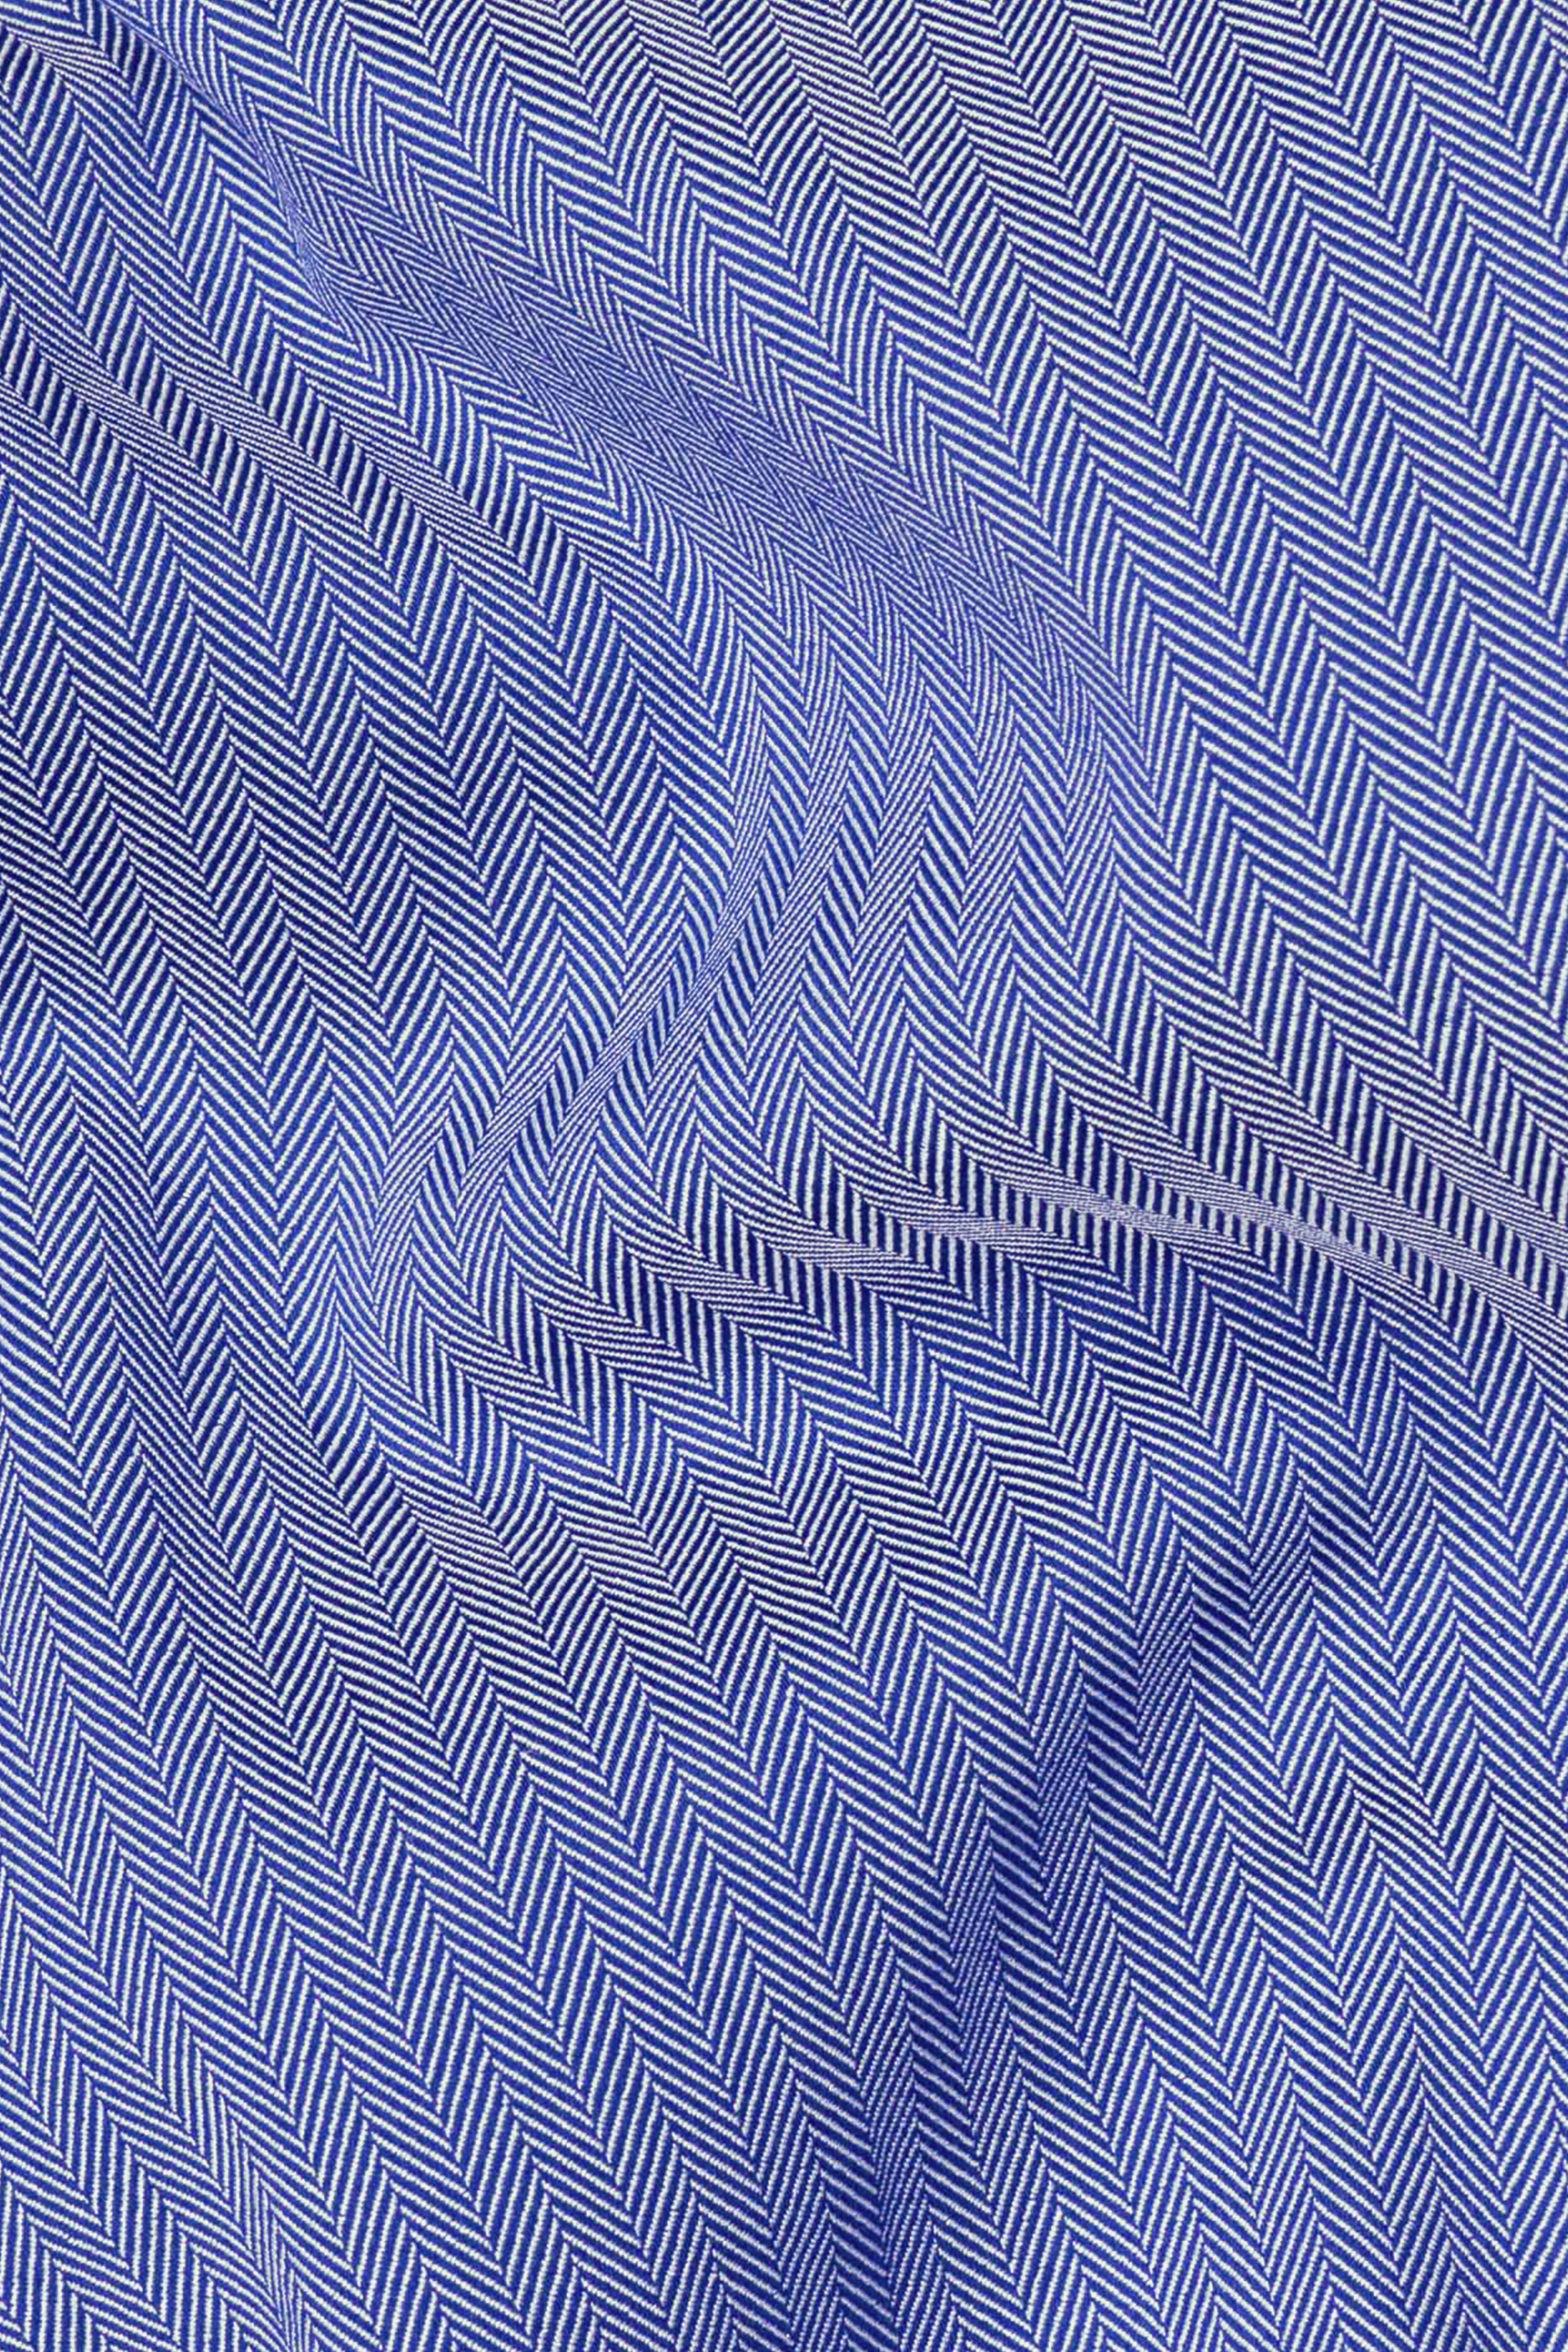 Wild Blue Yonder Subtle Striped Stretchable Herringbone Shirt